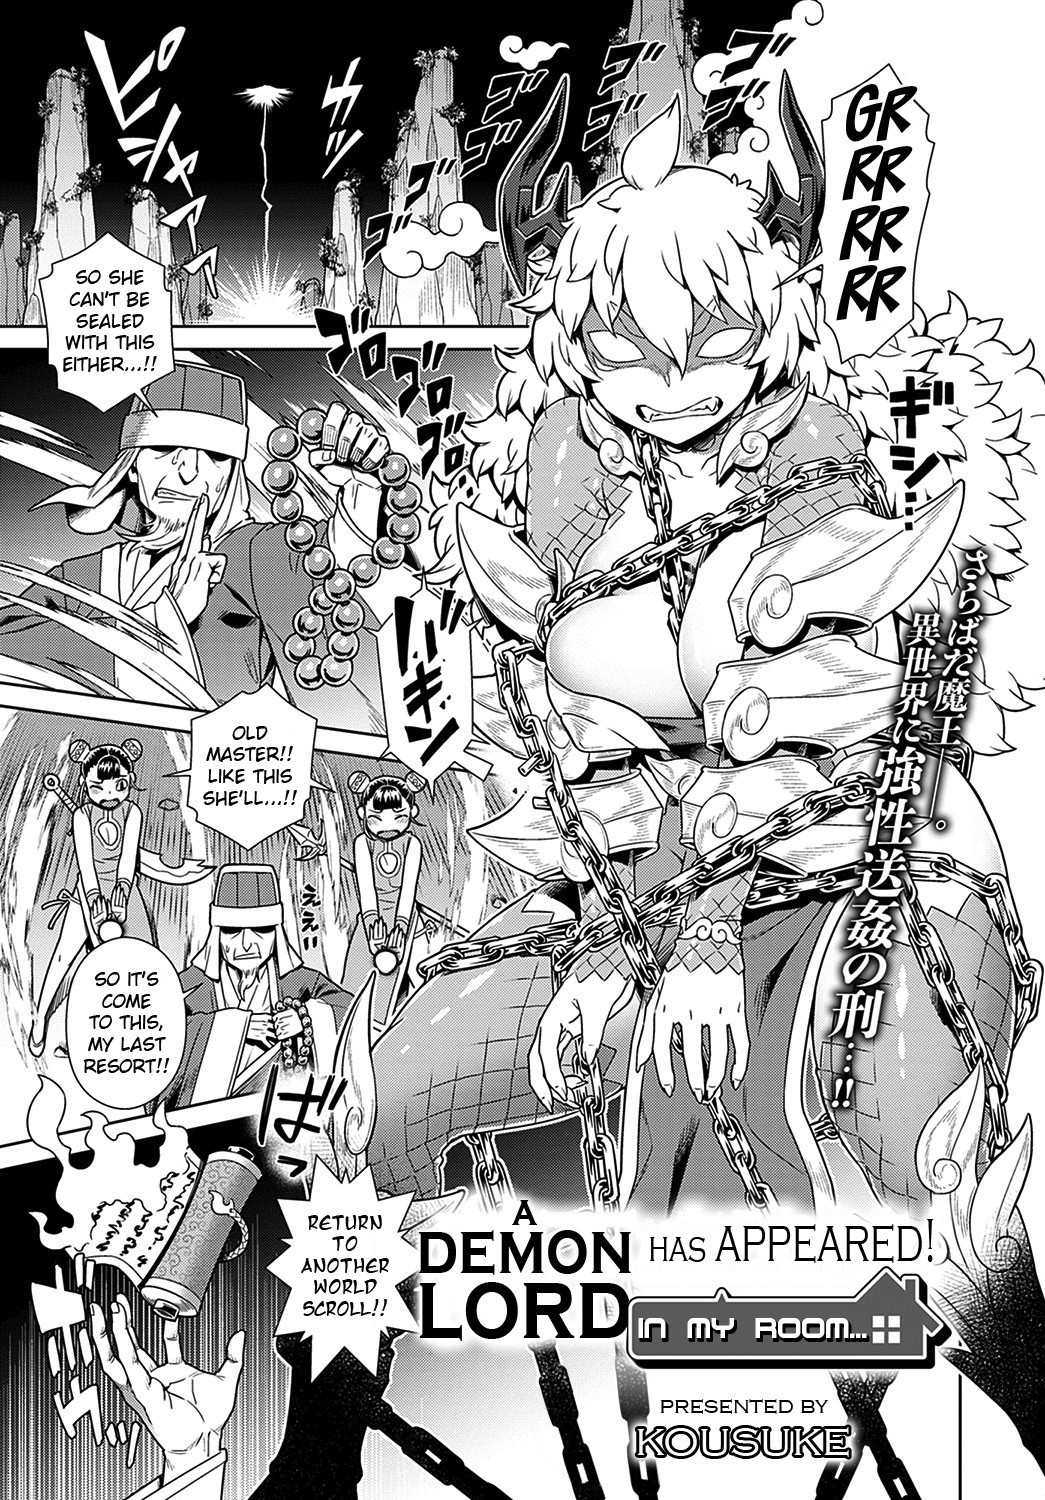 Hentai Manga Comic-A Demon Lord has Appeared! in my Room...-Read-1